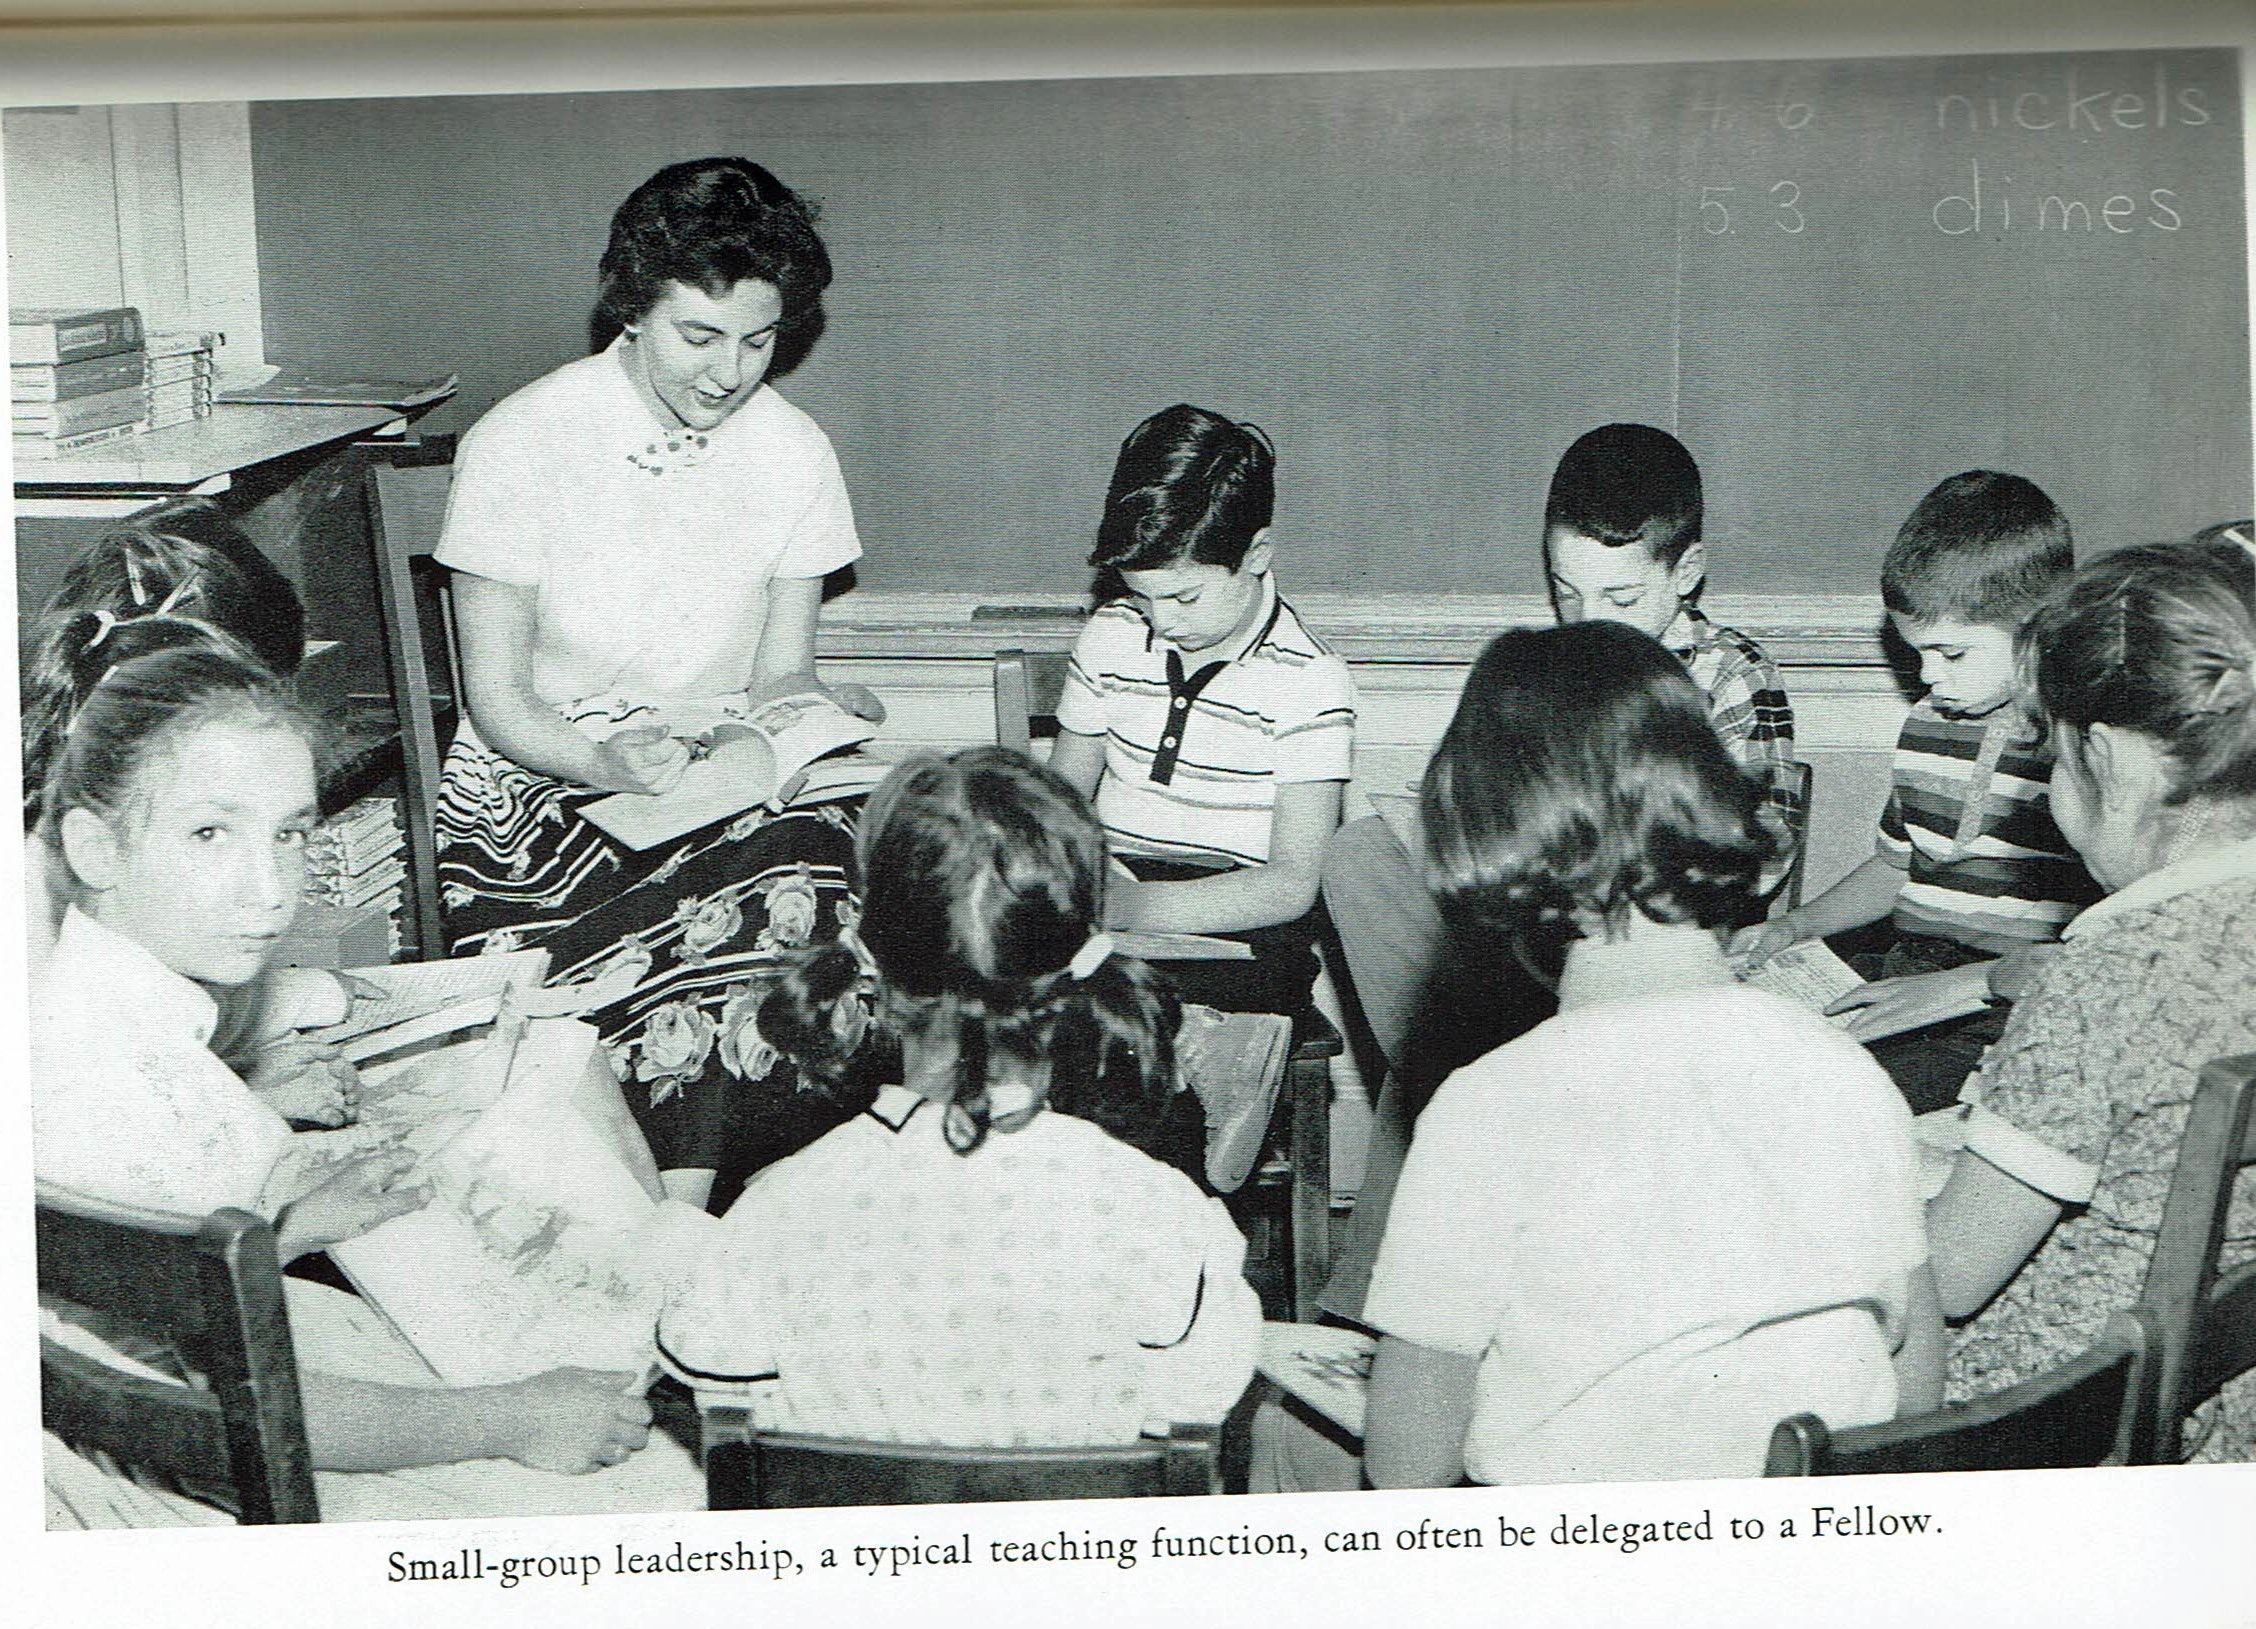 Elsie as a student teacher in 1959